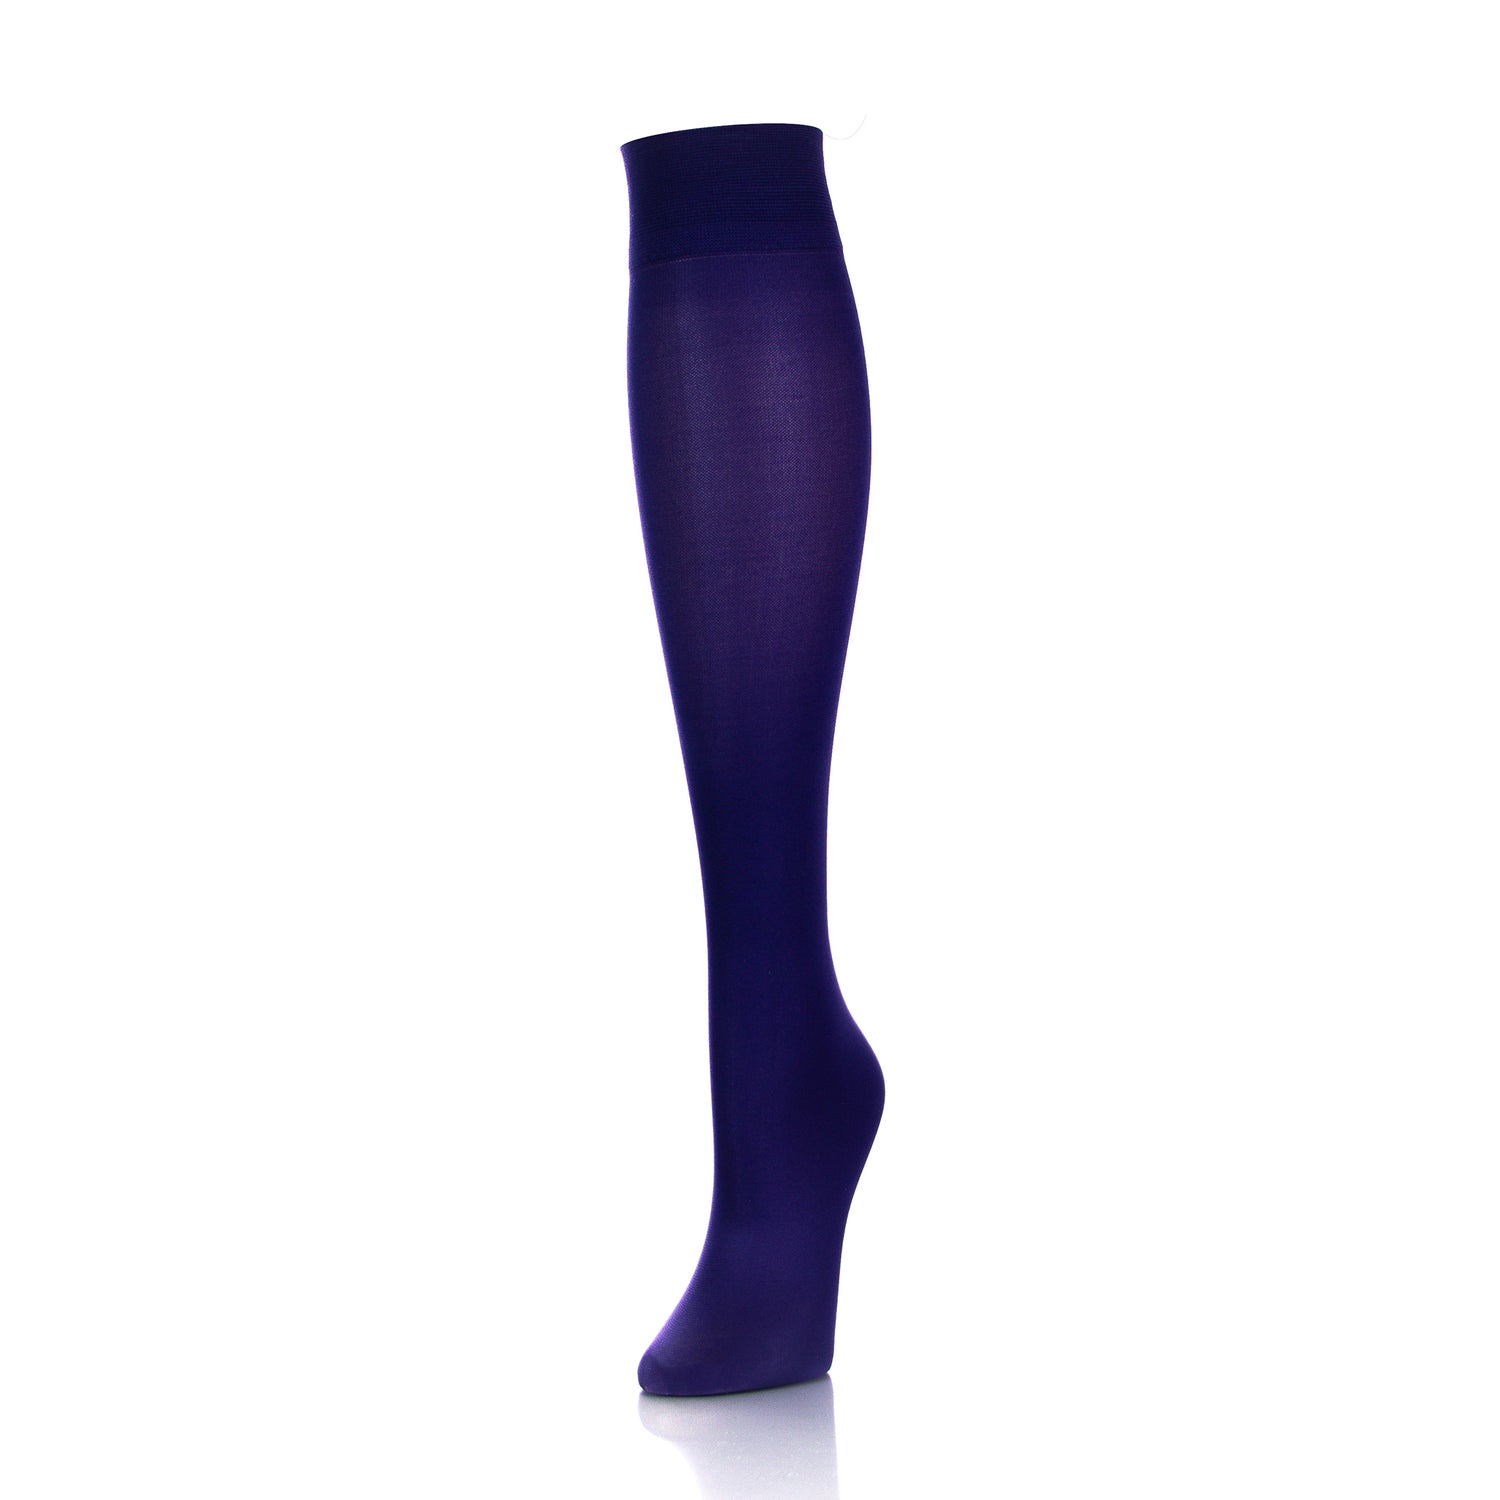 Support Stockings For Women - Coloured  - Purple - Doctor Brace Softmedi - Diagonal Outside Leg View